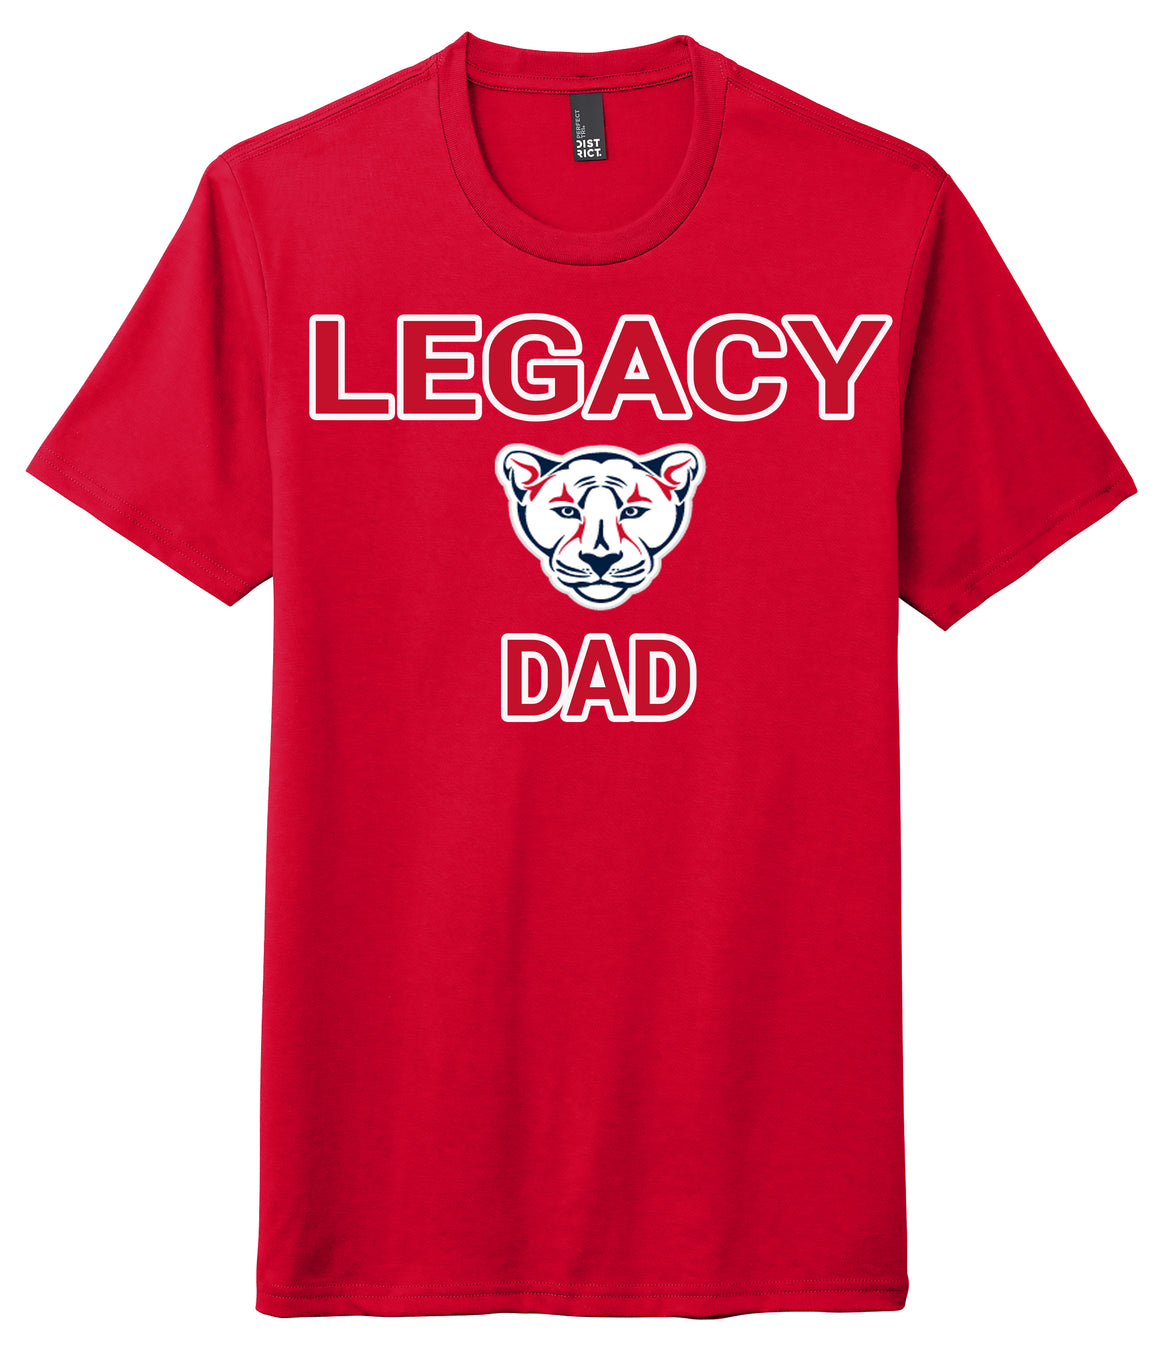 Legacy Traditional School Peoria - Dad Shirt